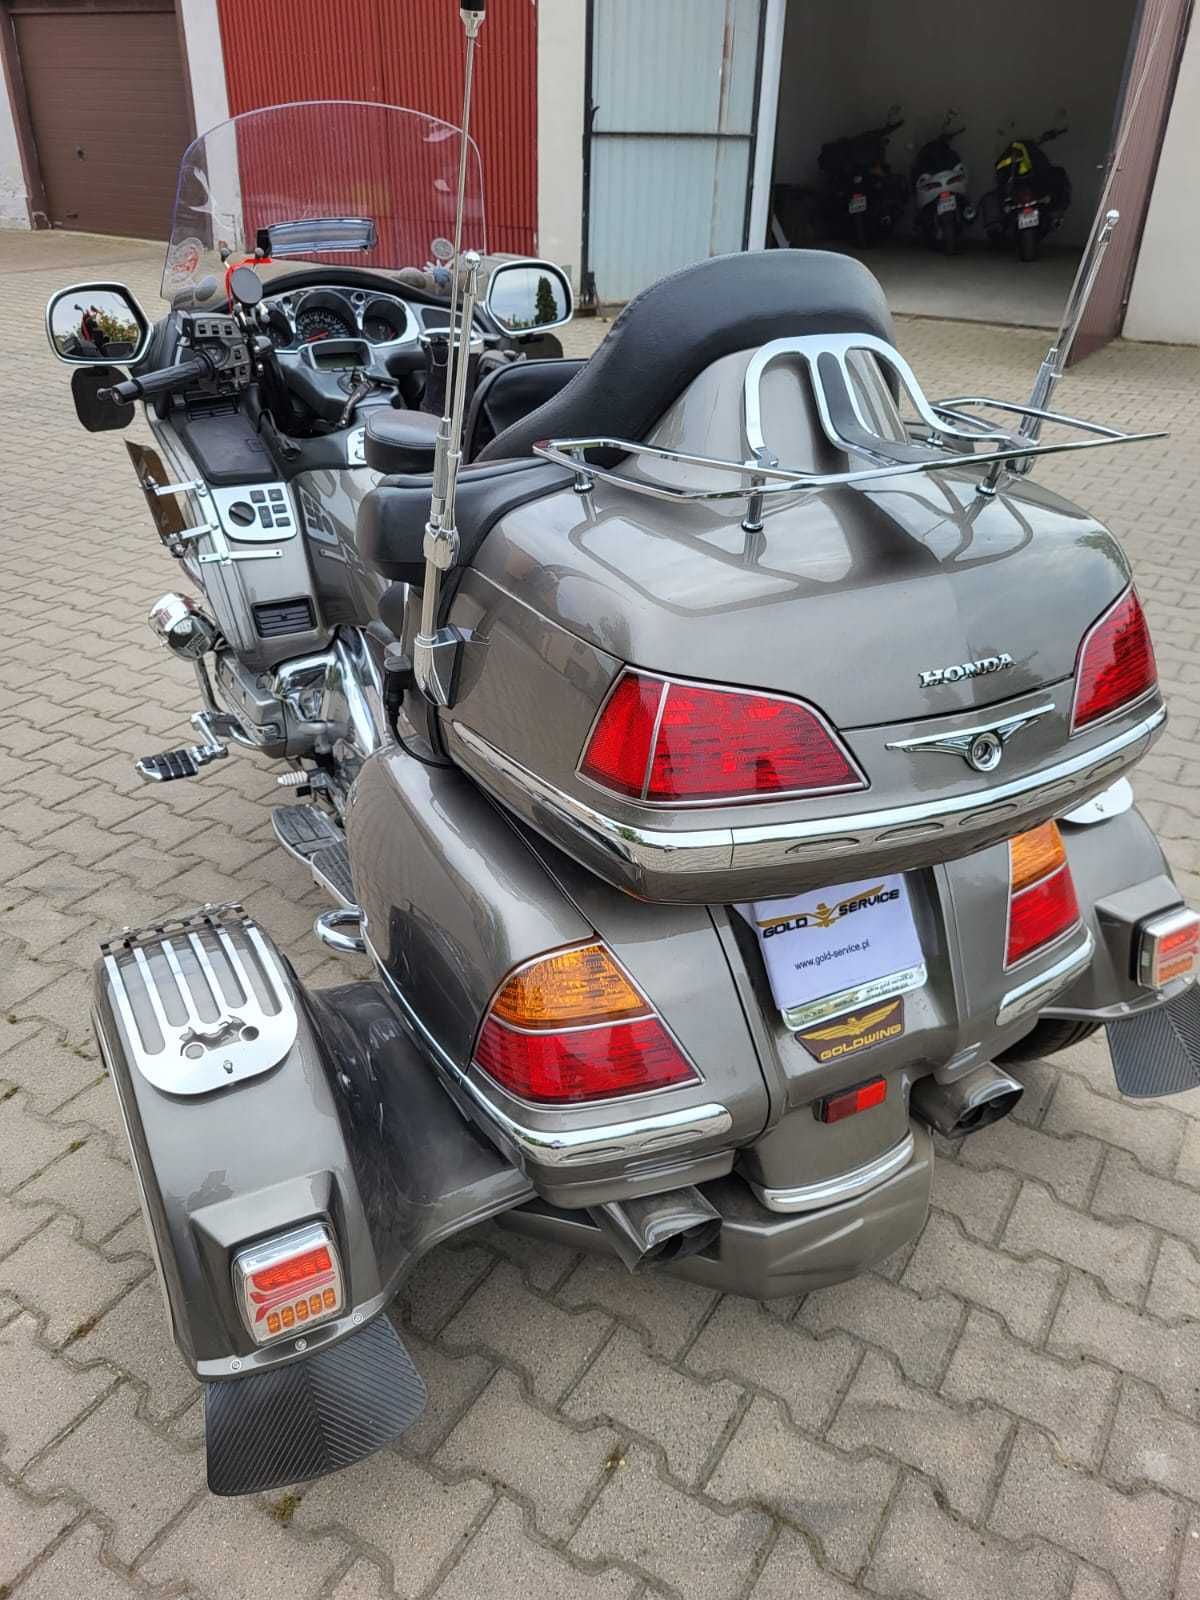 Motocykl turystyczny Honda Gold Wing